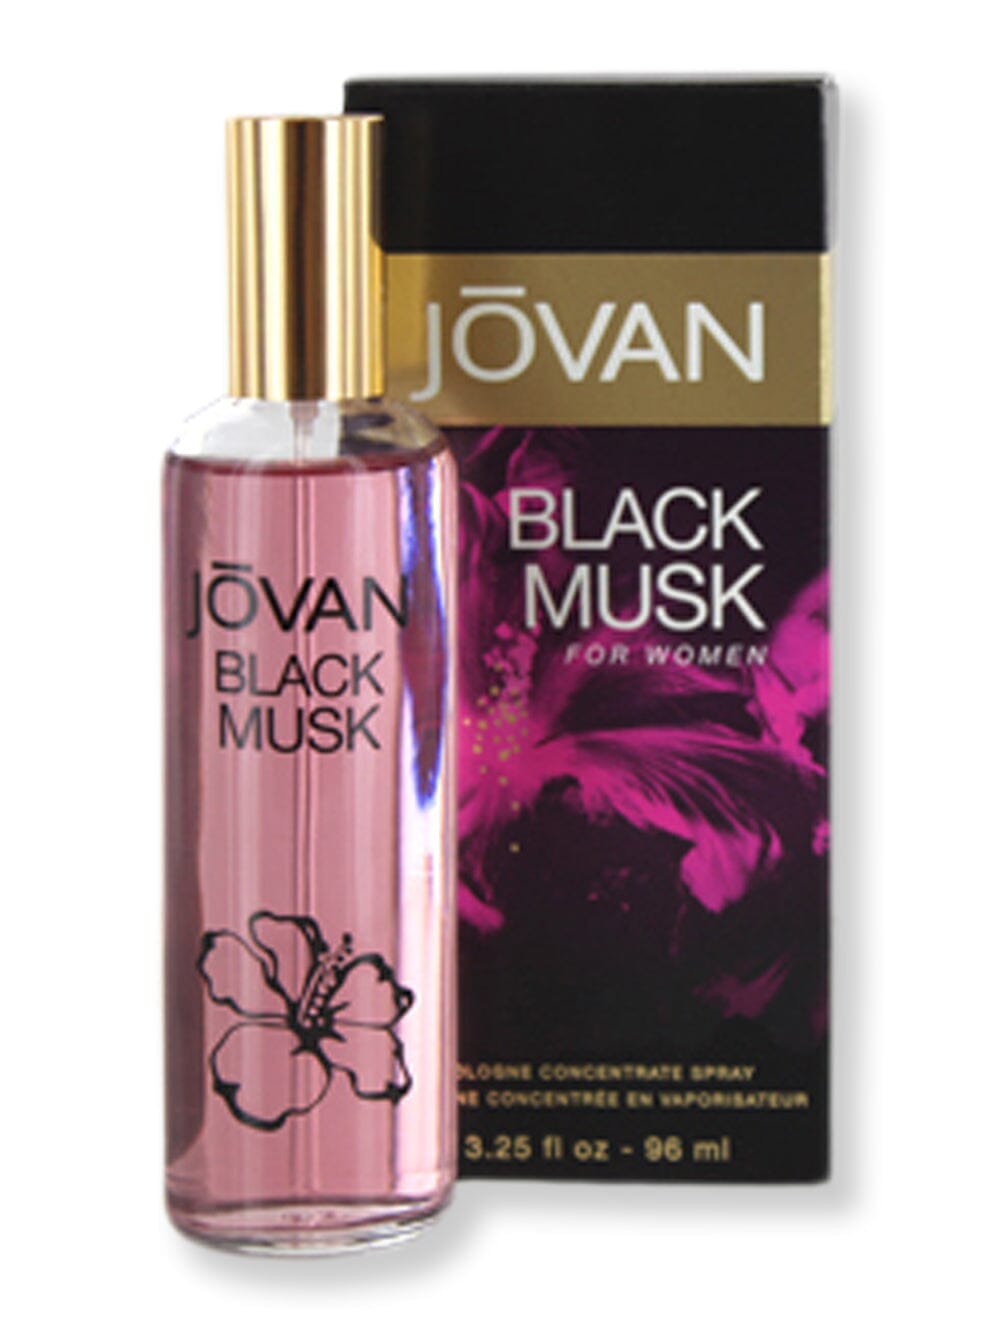 Jovan Jovan Black Musk Cologne Concentrate Spray 3 oz Cologne 